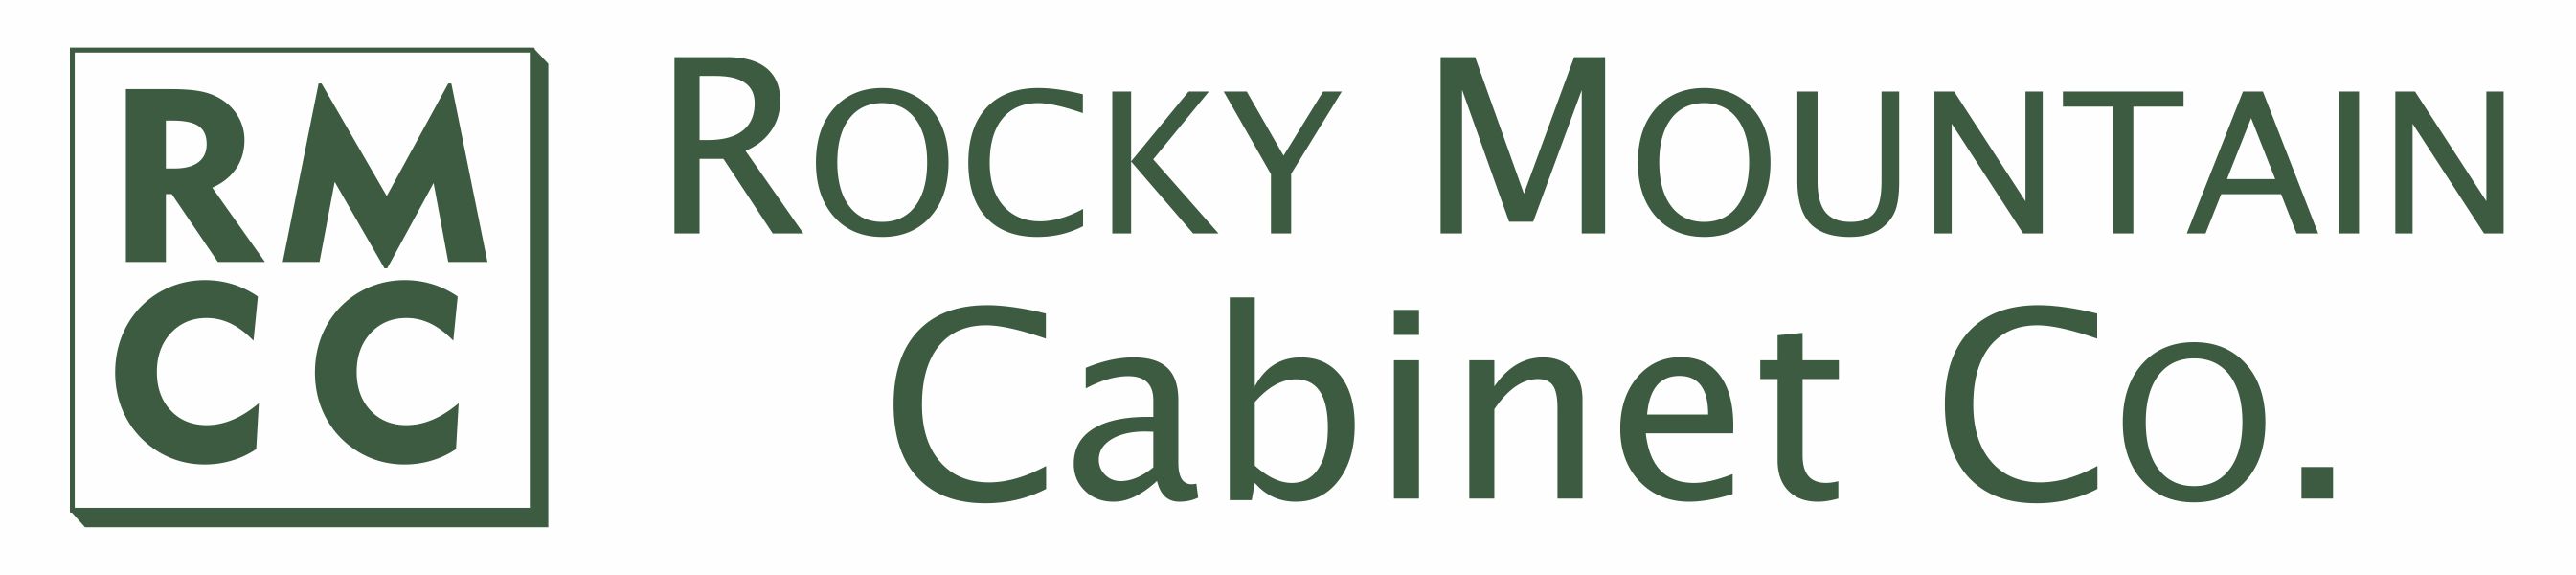 RMCC wide logo